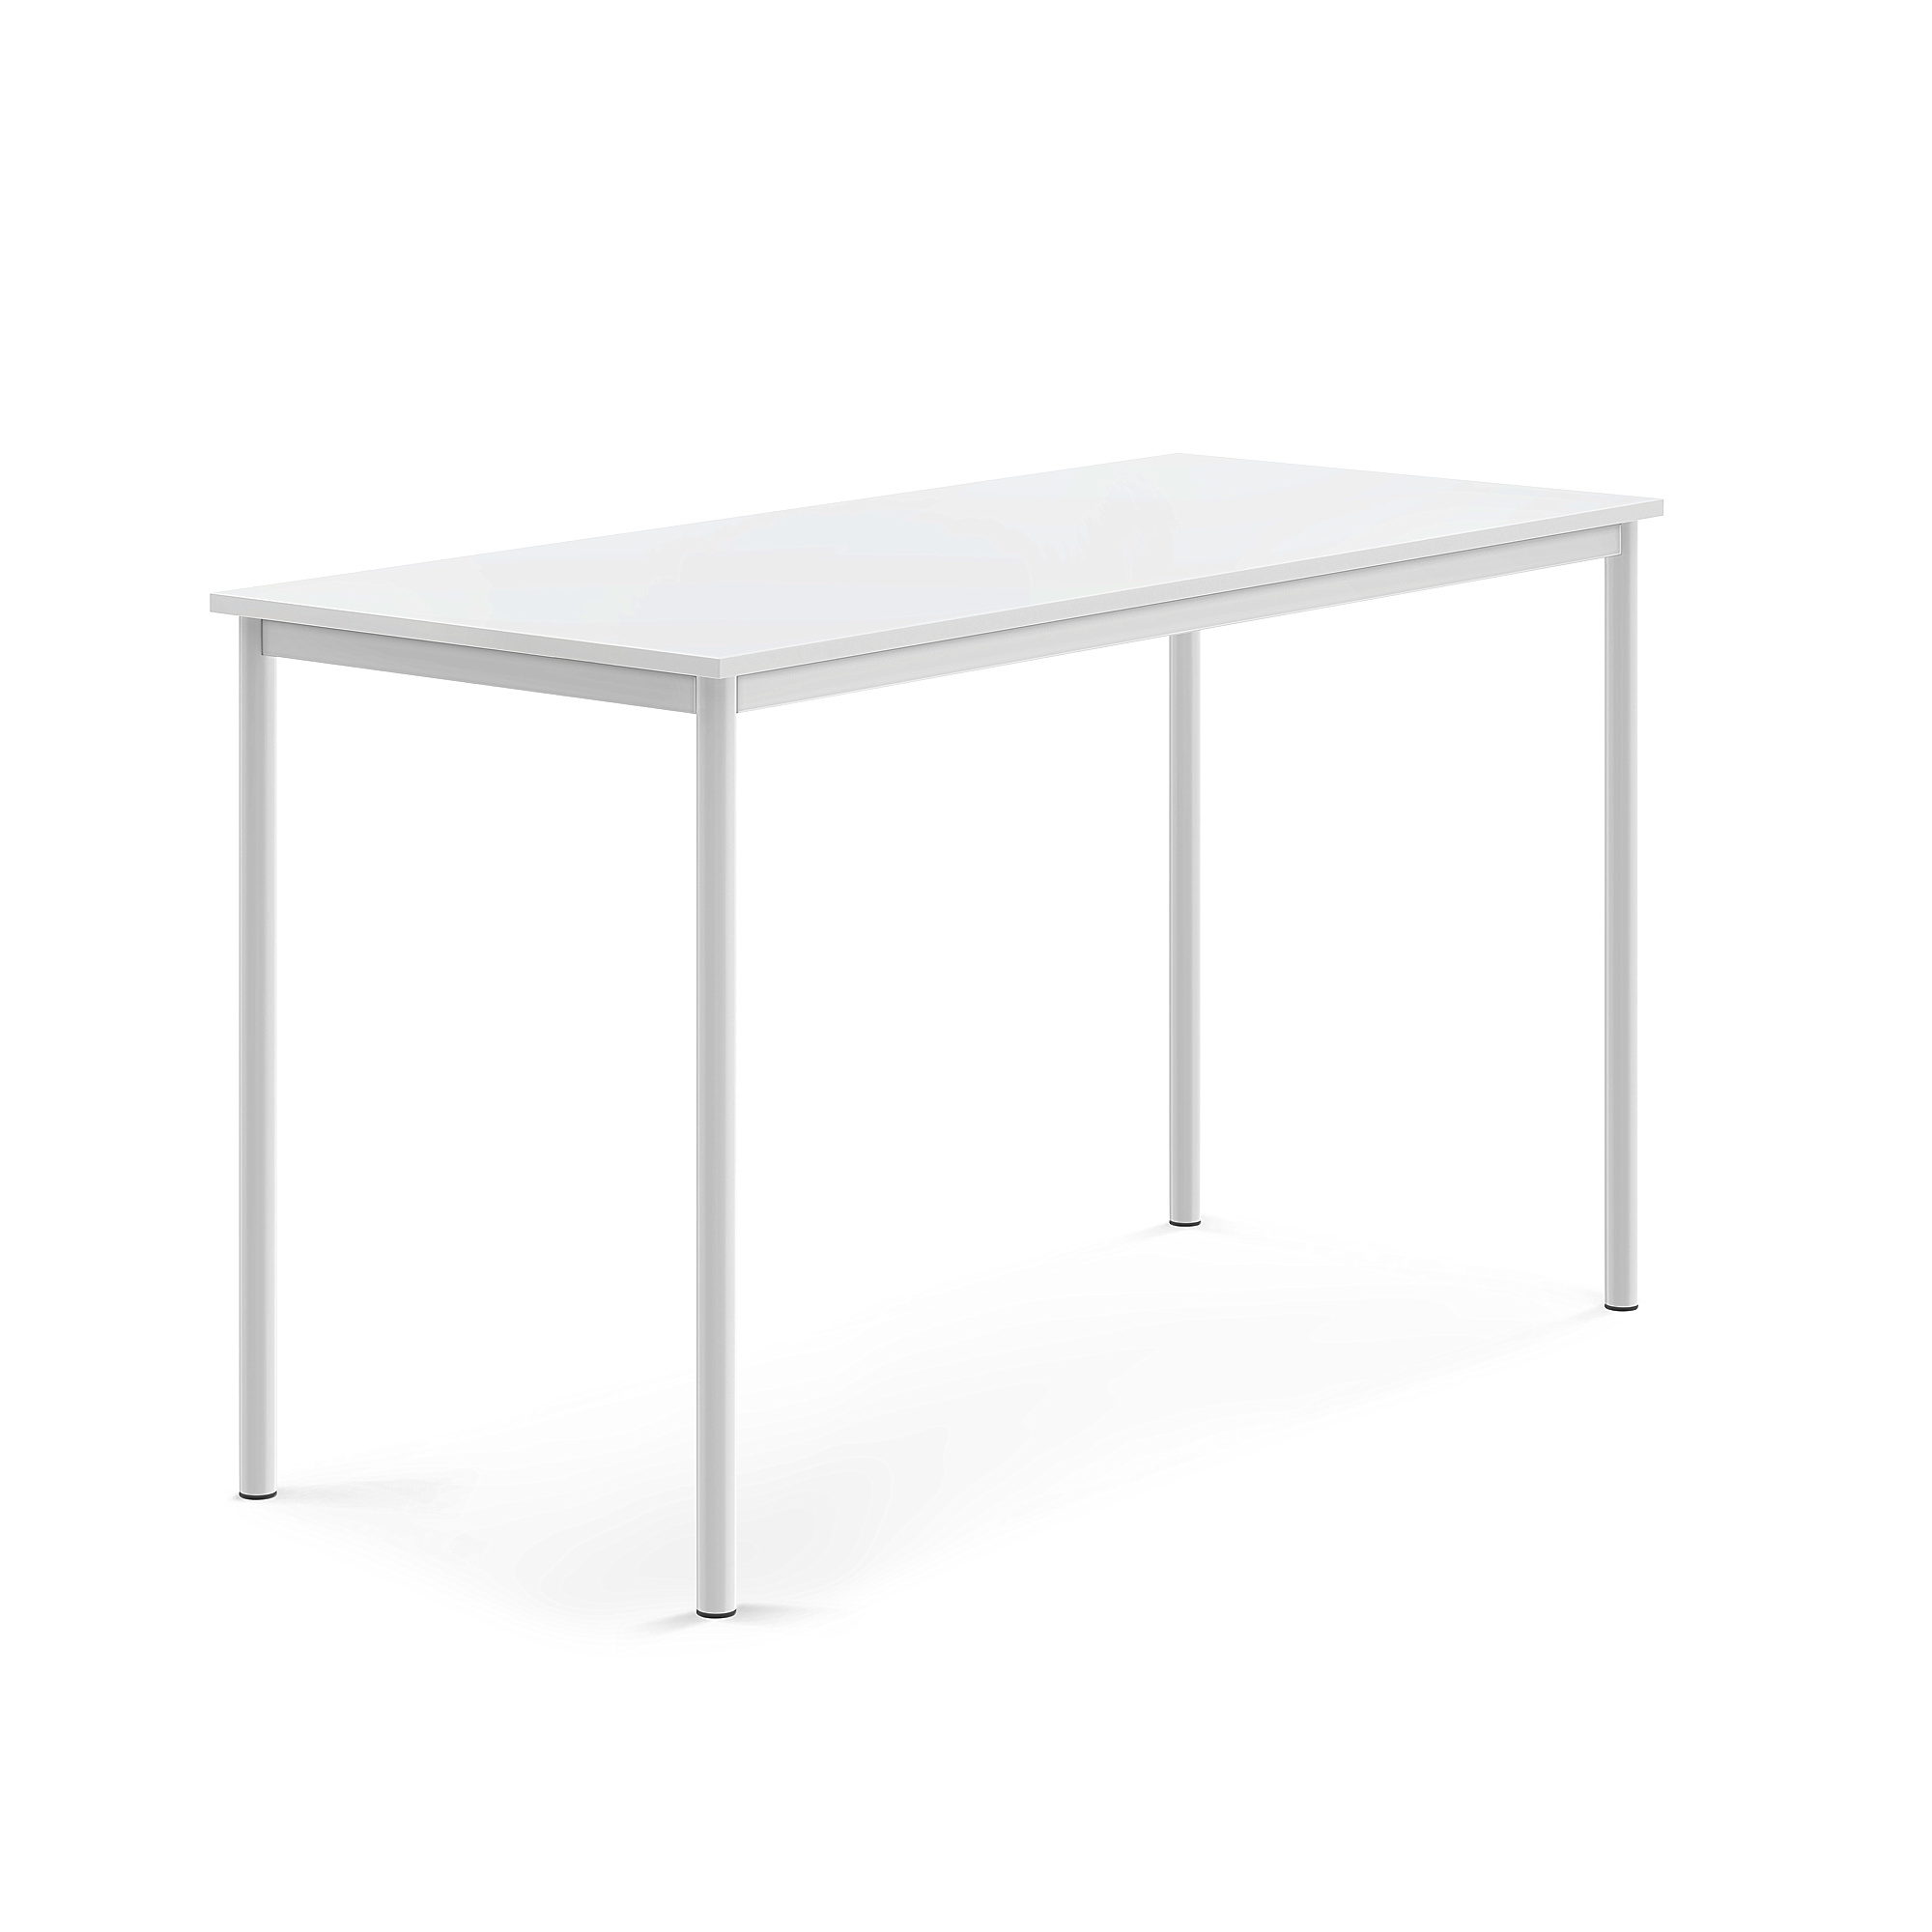 Stůl SONITUS, 1600x700x900 mm, bílé nohy, HPL deska tlumící hluk, bílá